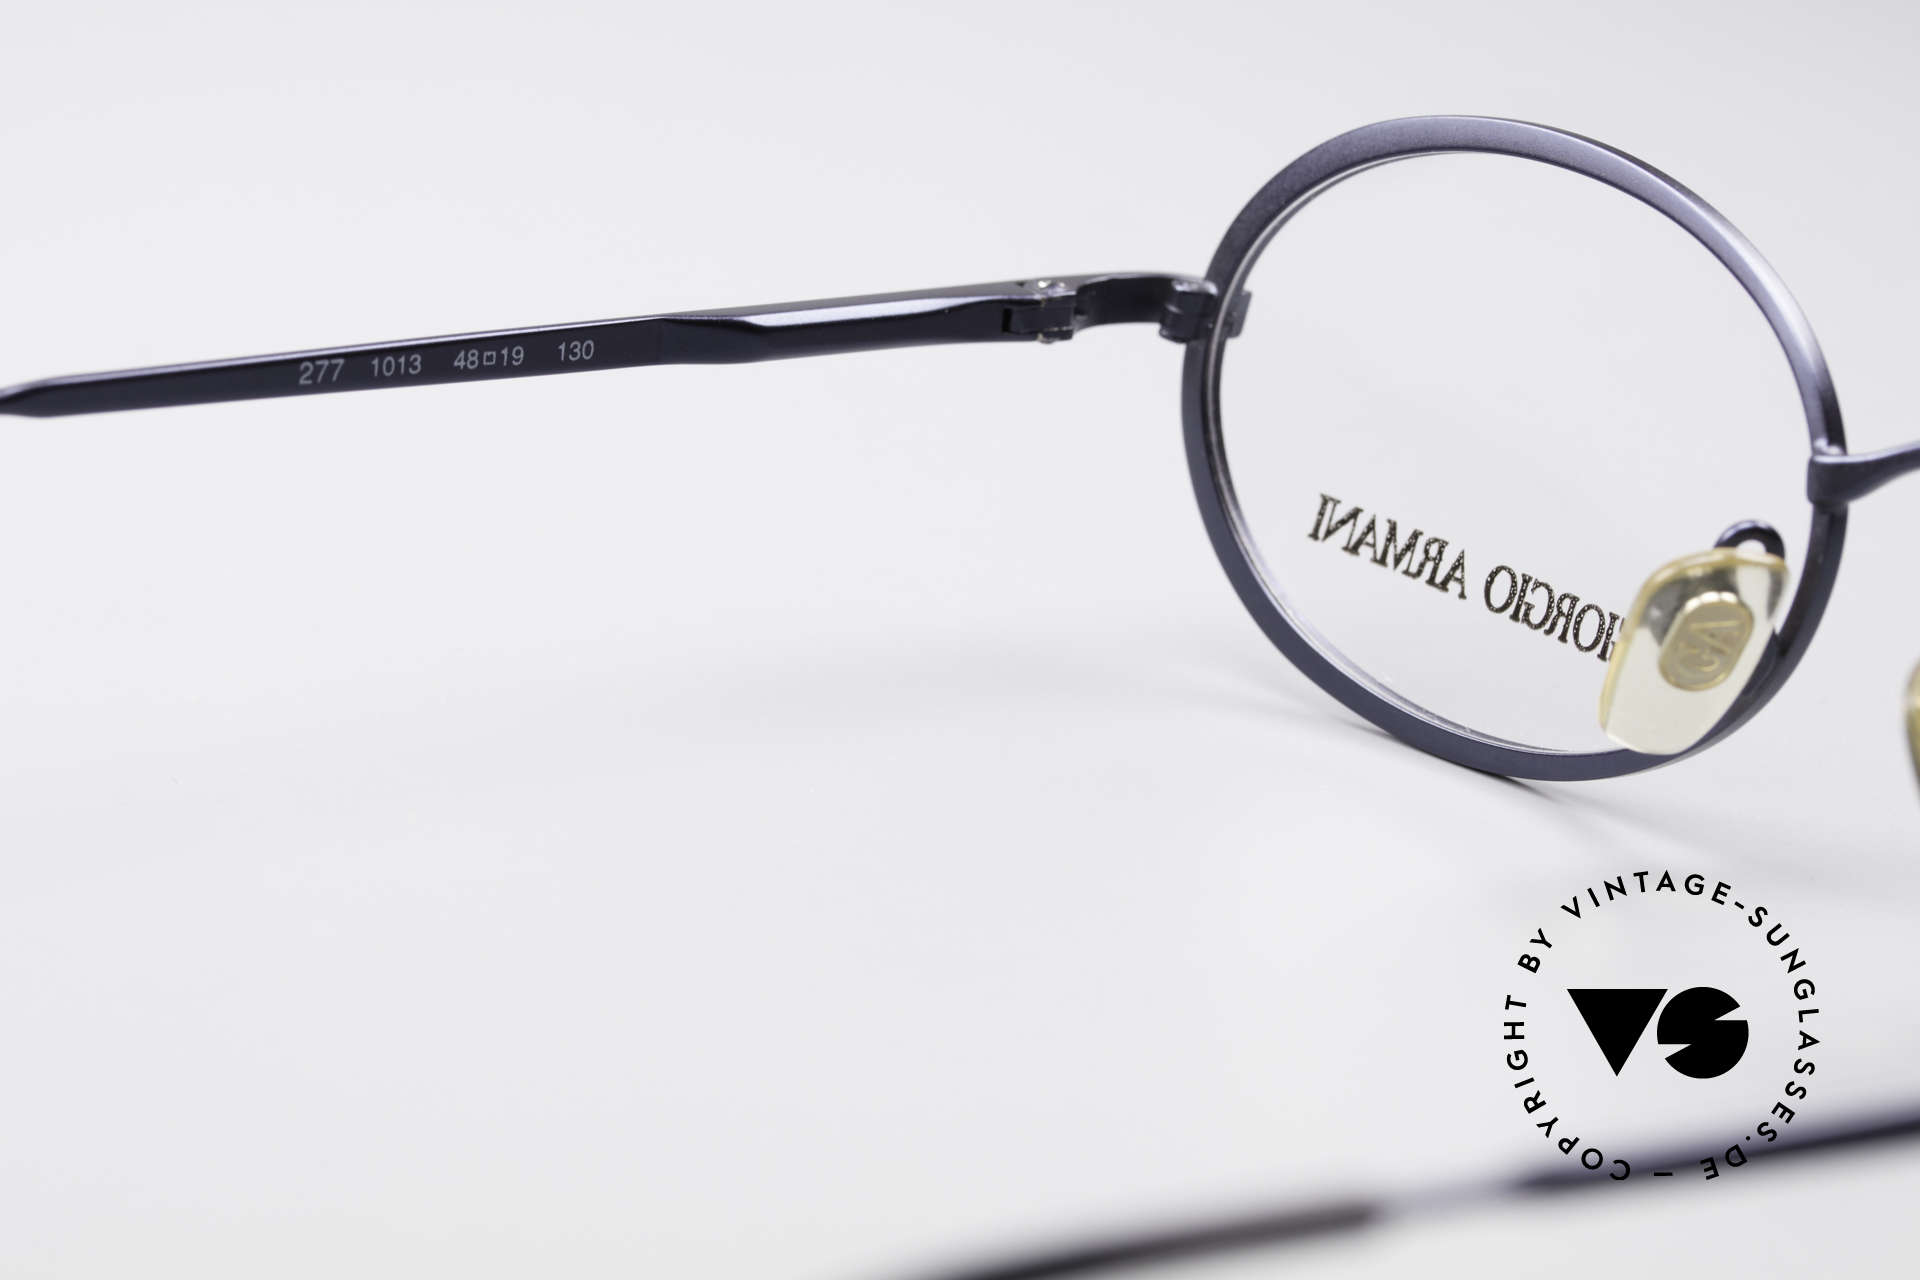 Giorgio Armani 277 90's Oval Vintage Eyeglasses, frame fits optical lenses or sun lenses optionally, Made for Men and Women